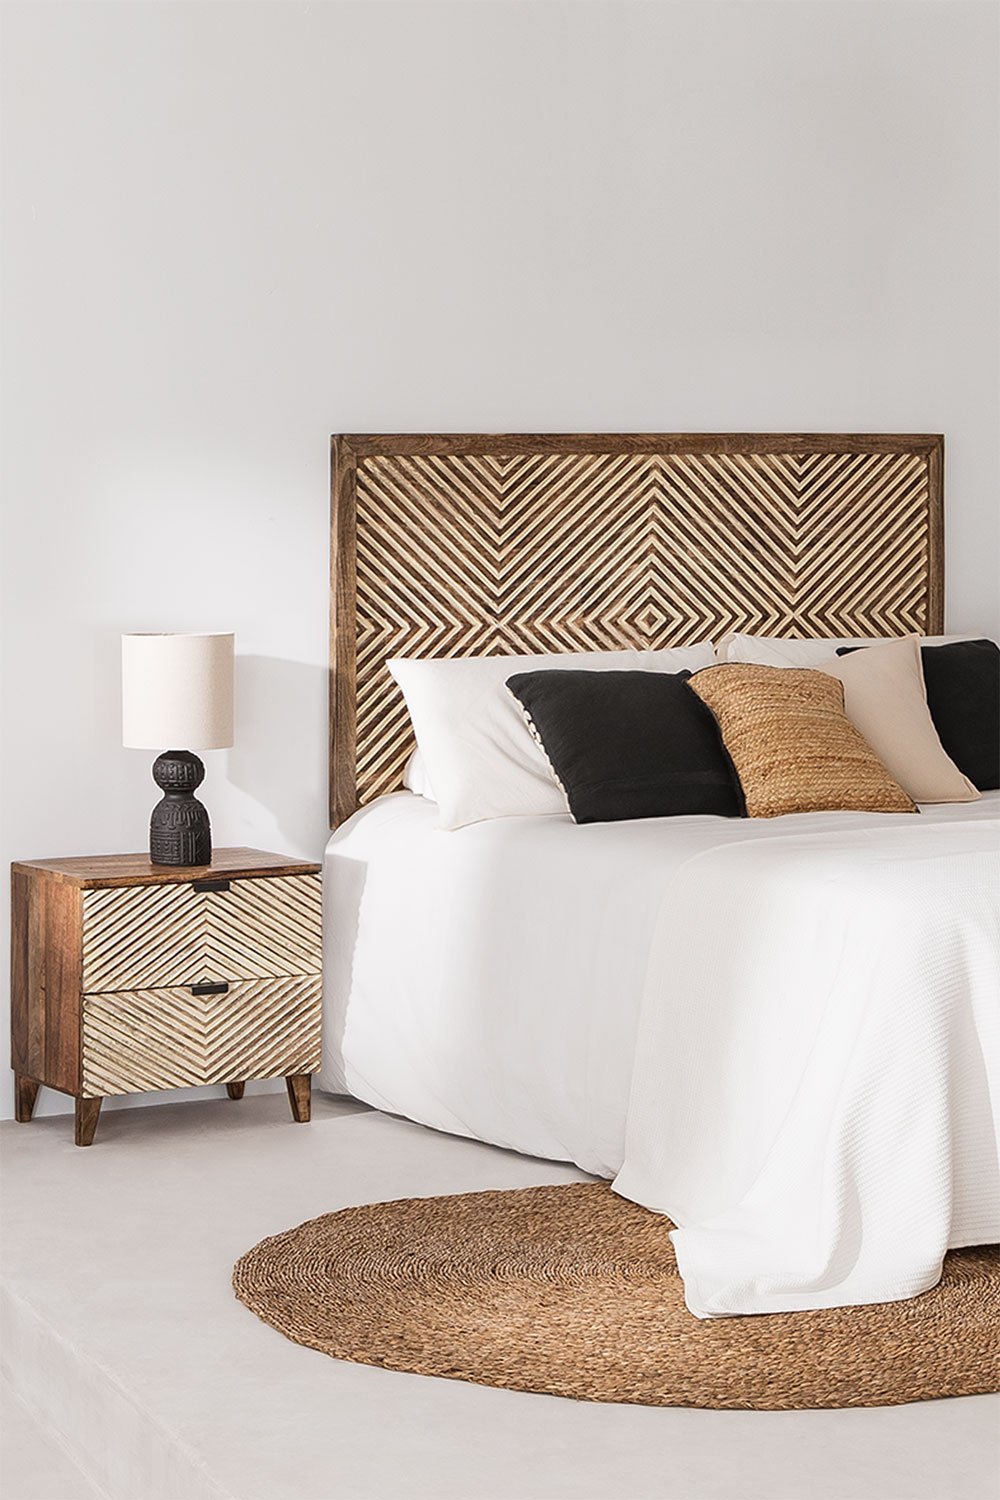 Hoofdeinde voor bed van 150 cm in Mango hout Alembe, galerij beeld 1